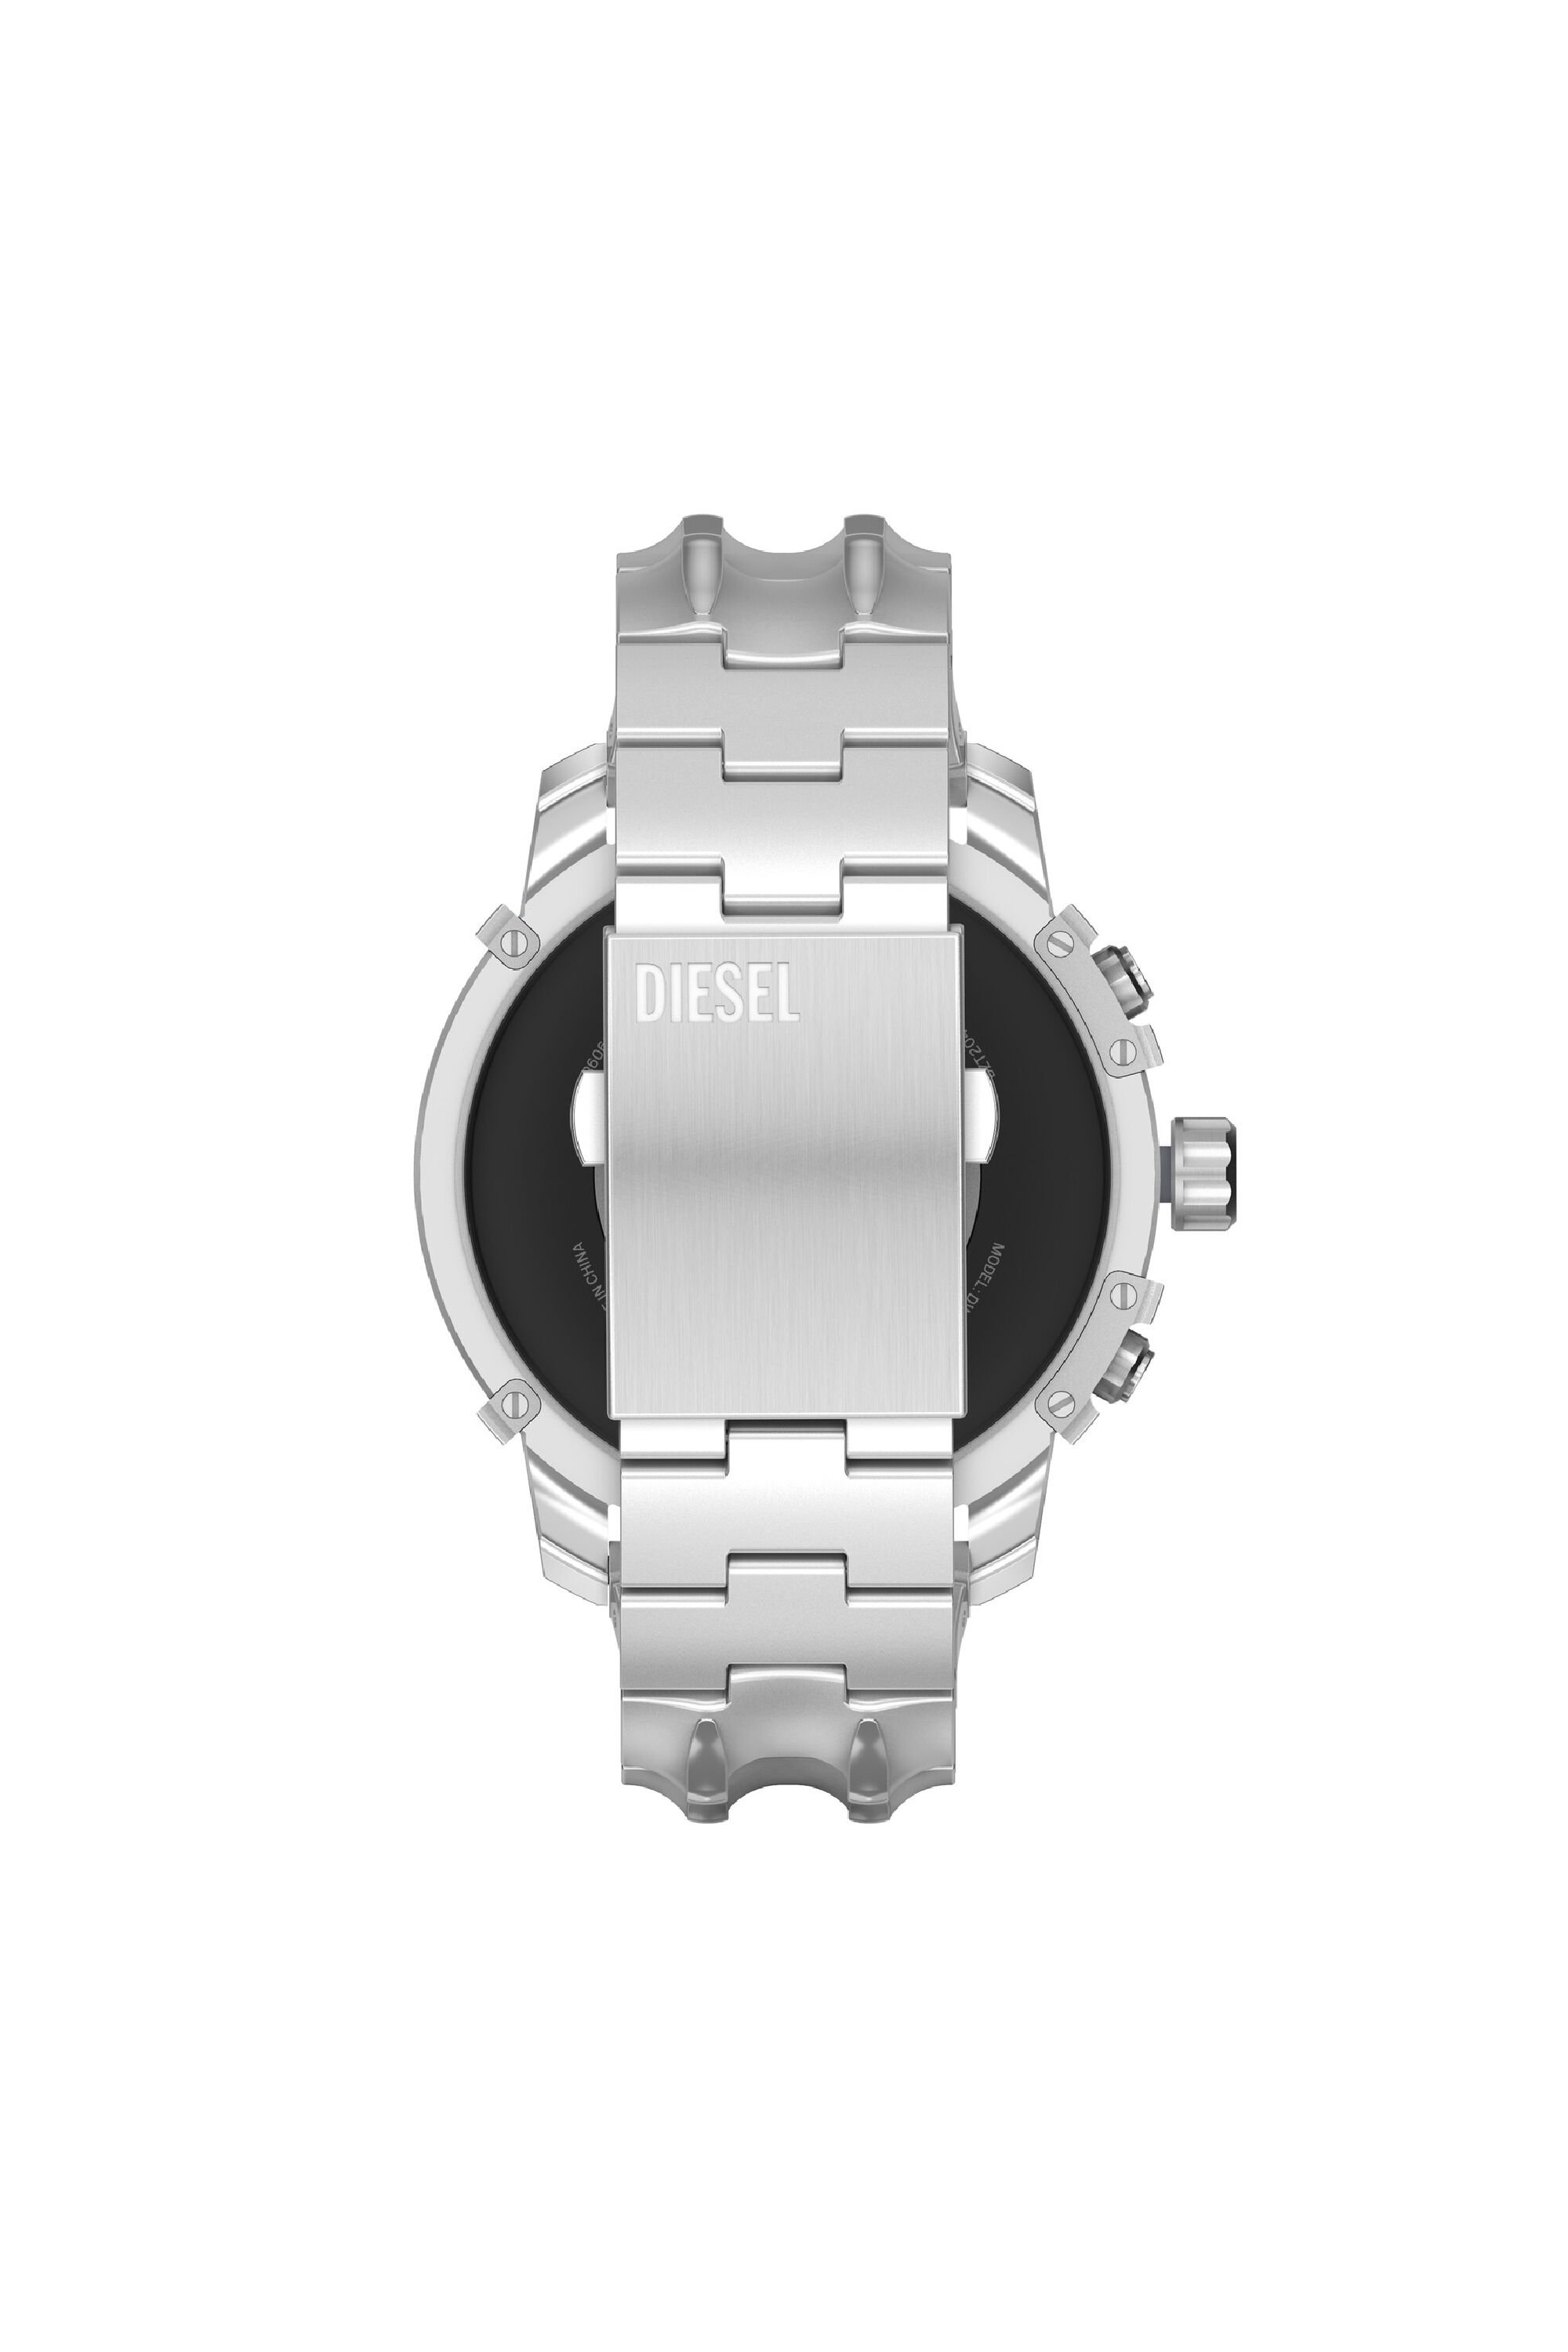 Diesel - DZT2040, Man Griffed stainless steel smartwatch in Silver - Image 2